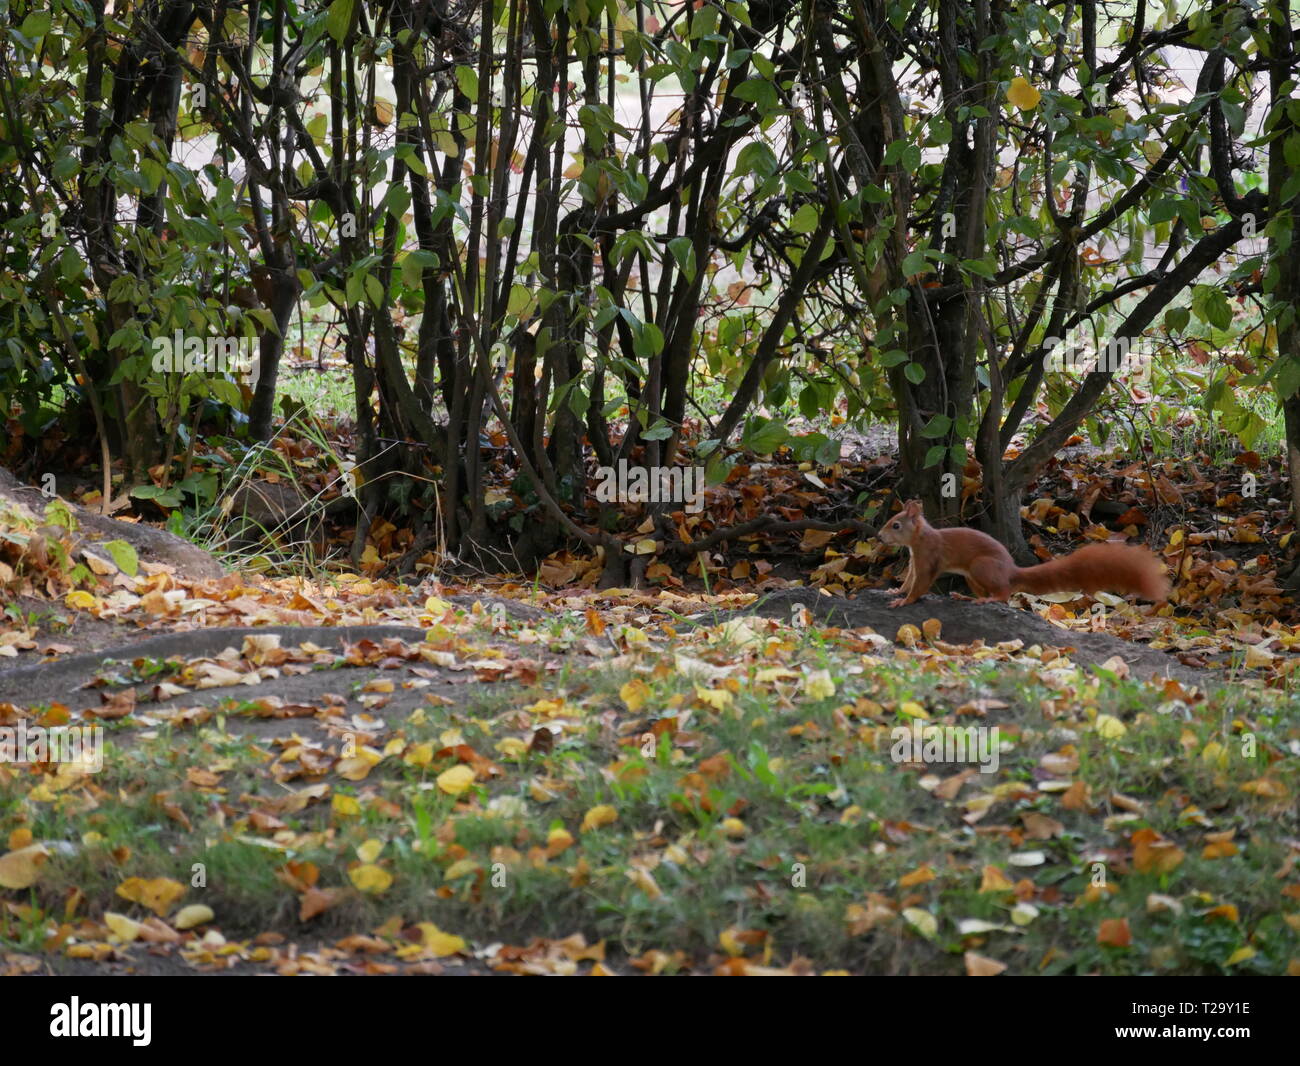 Squirrel running through the garden Stock Photo